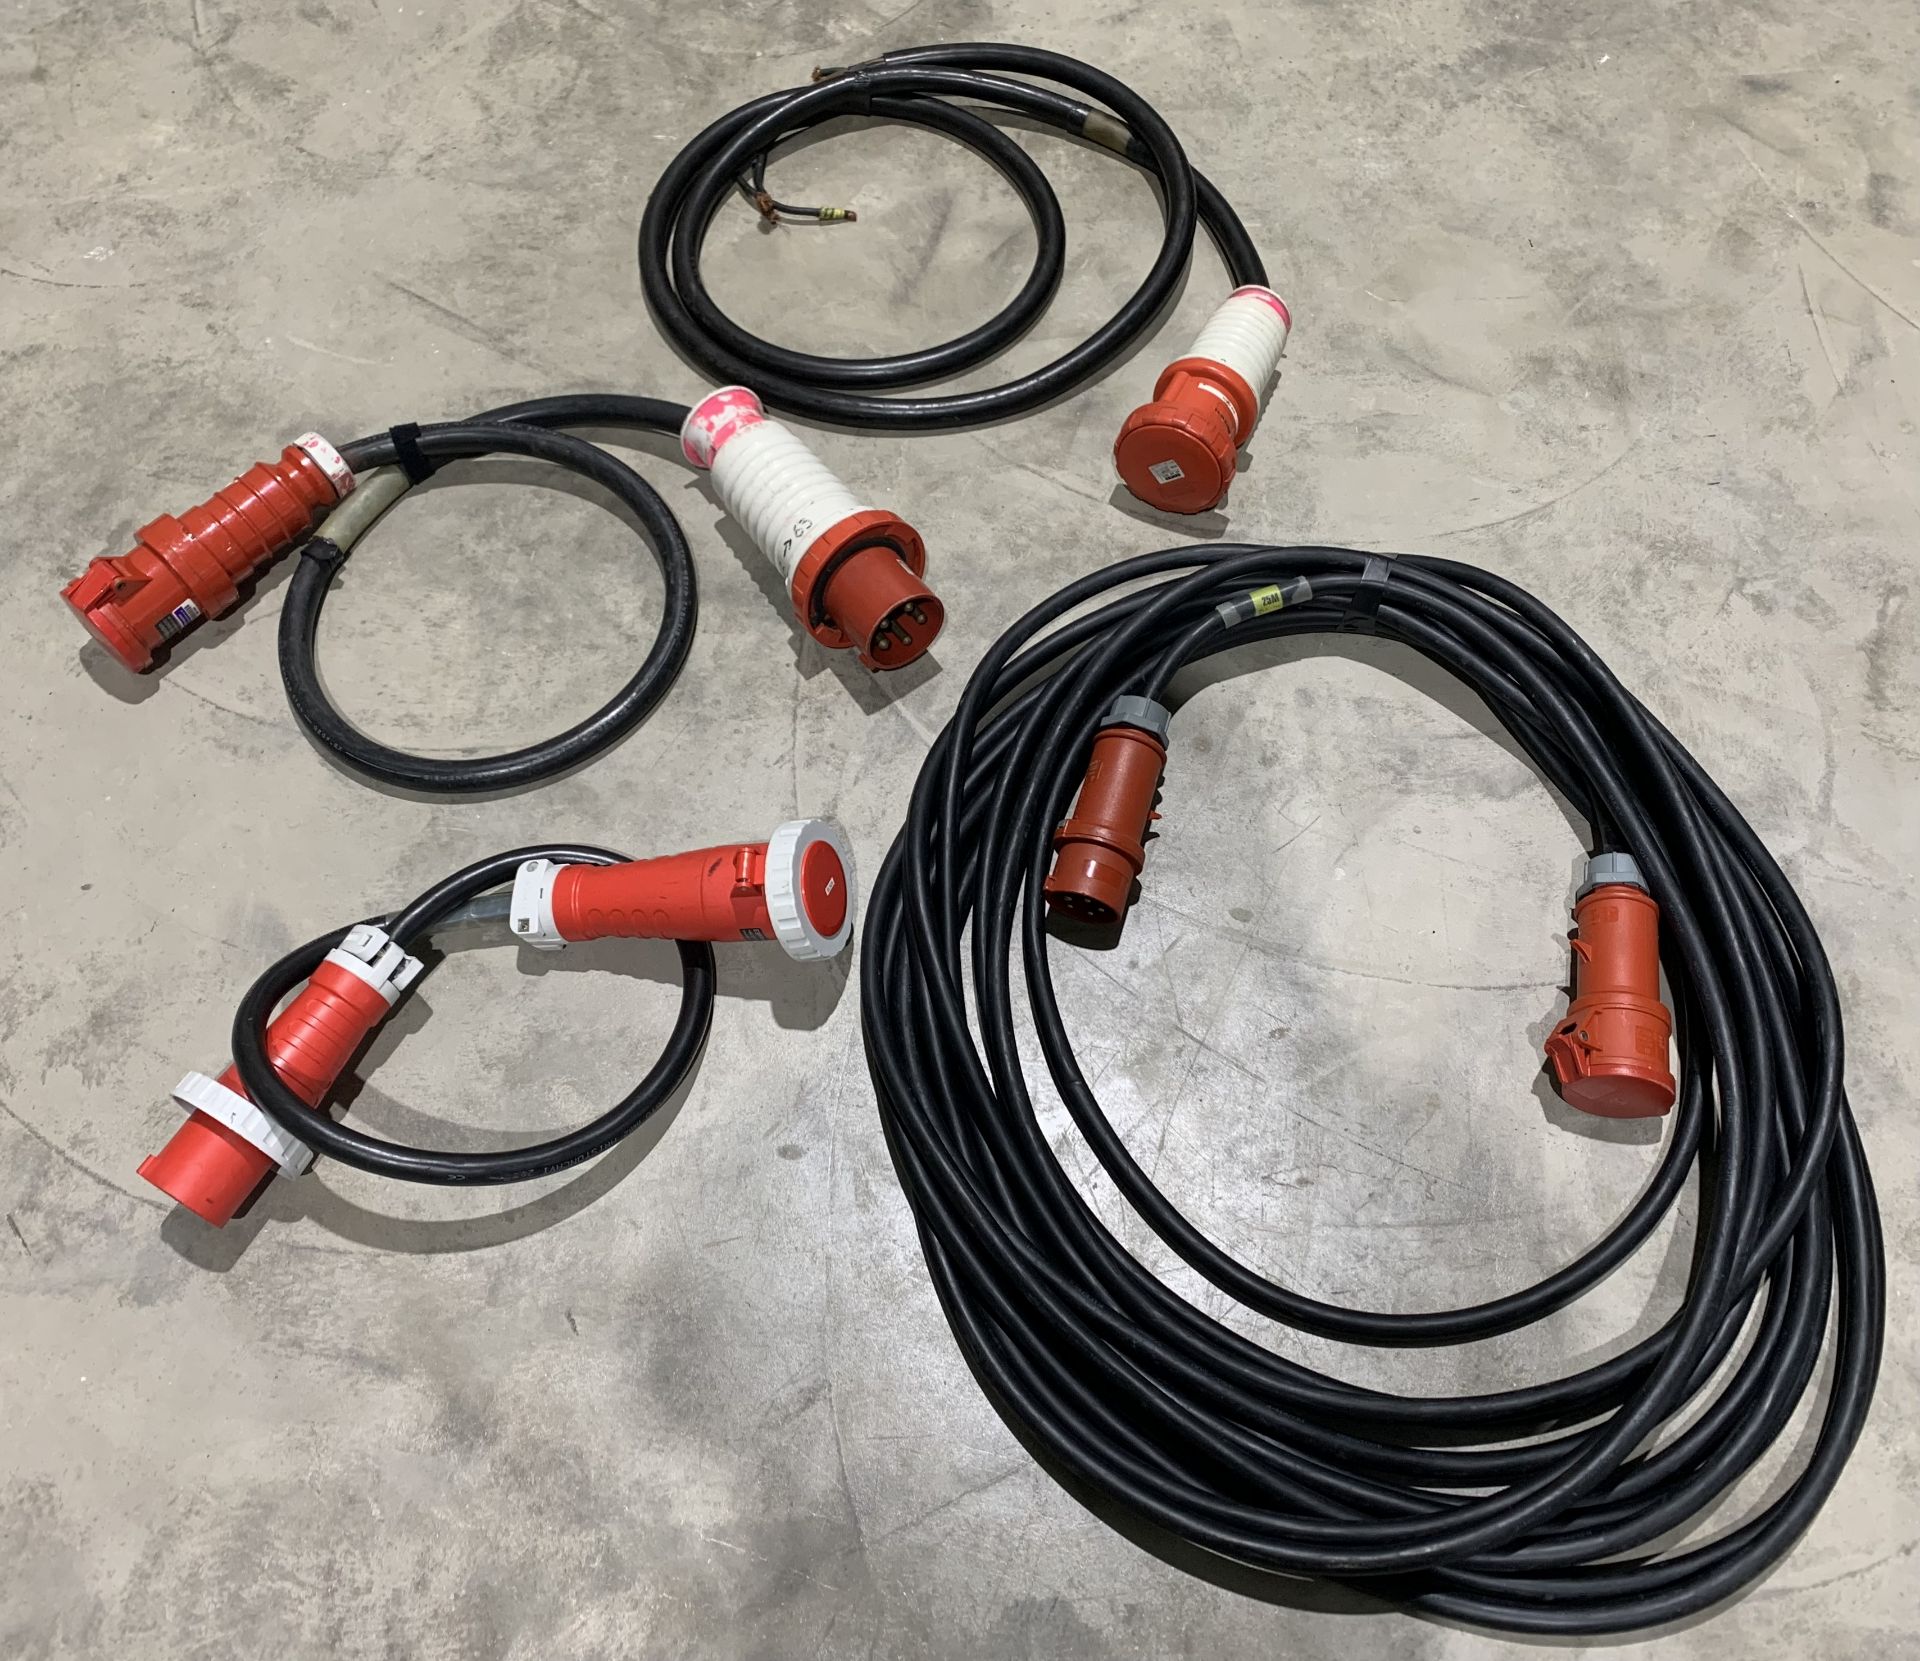 3 Phase Mains Cable Distro Bundle Condition: Ex-Hire Includes 1 x 25 metre 32/3 Cable, 1 x 1 metre